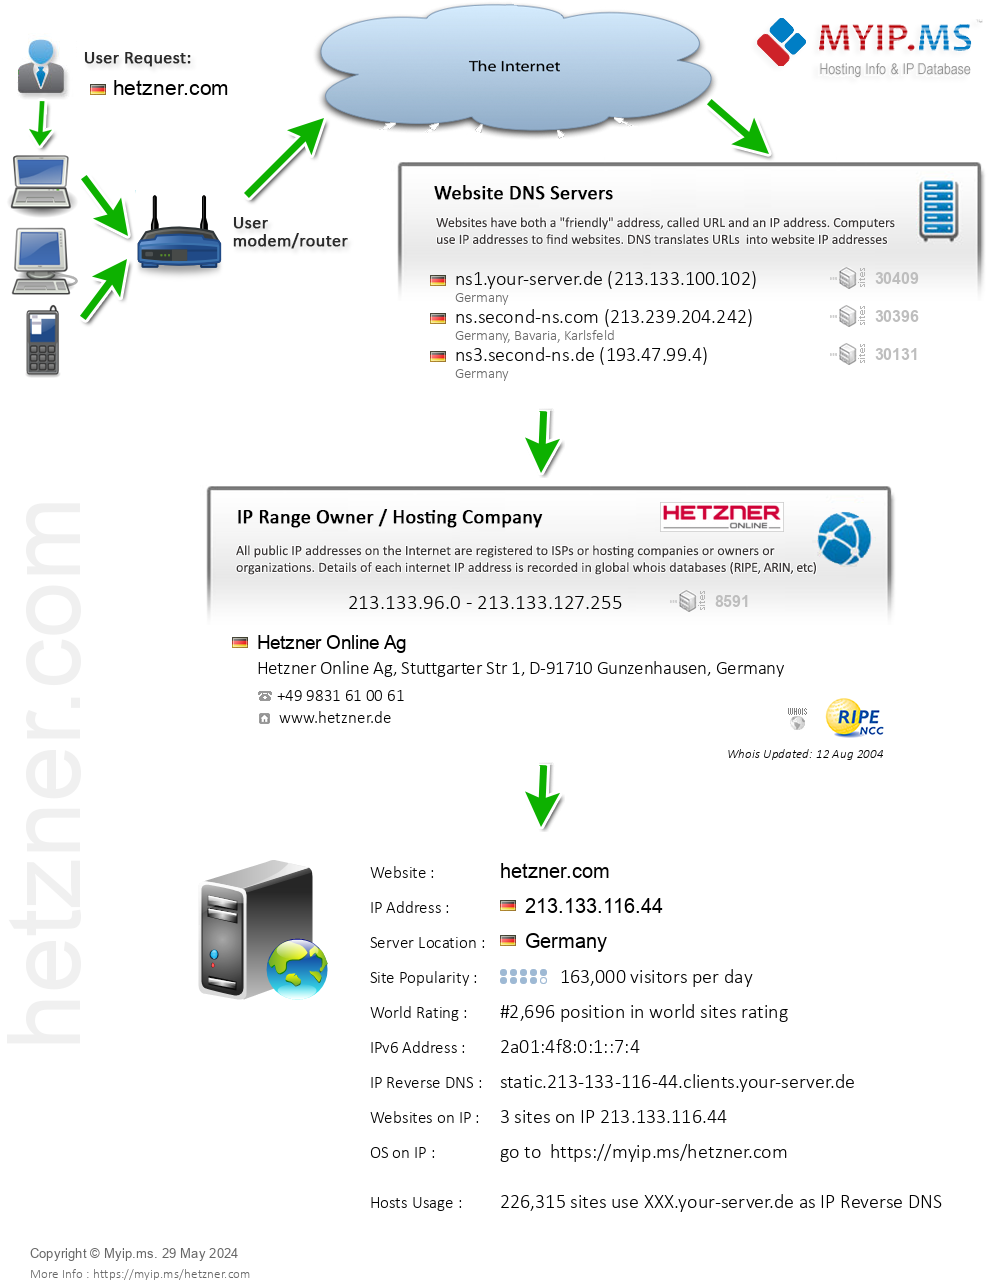 Hetzner.com - Website Hosting Visual IP Diagram